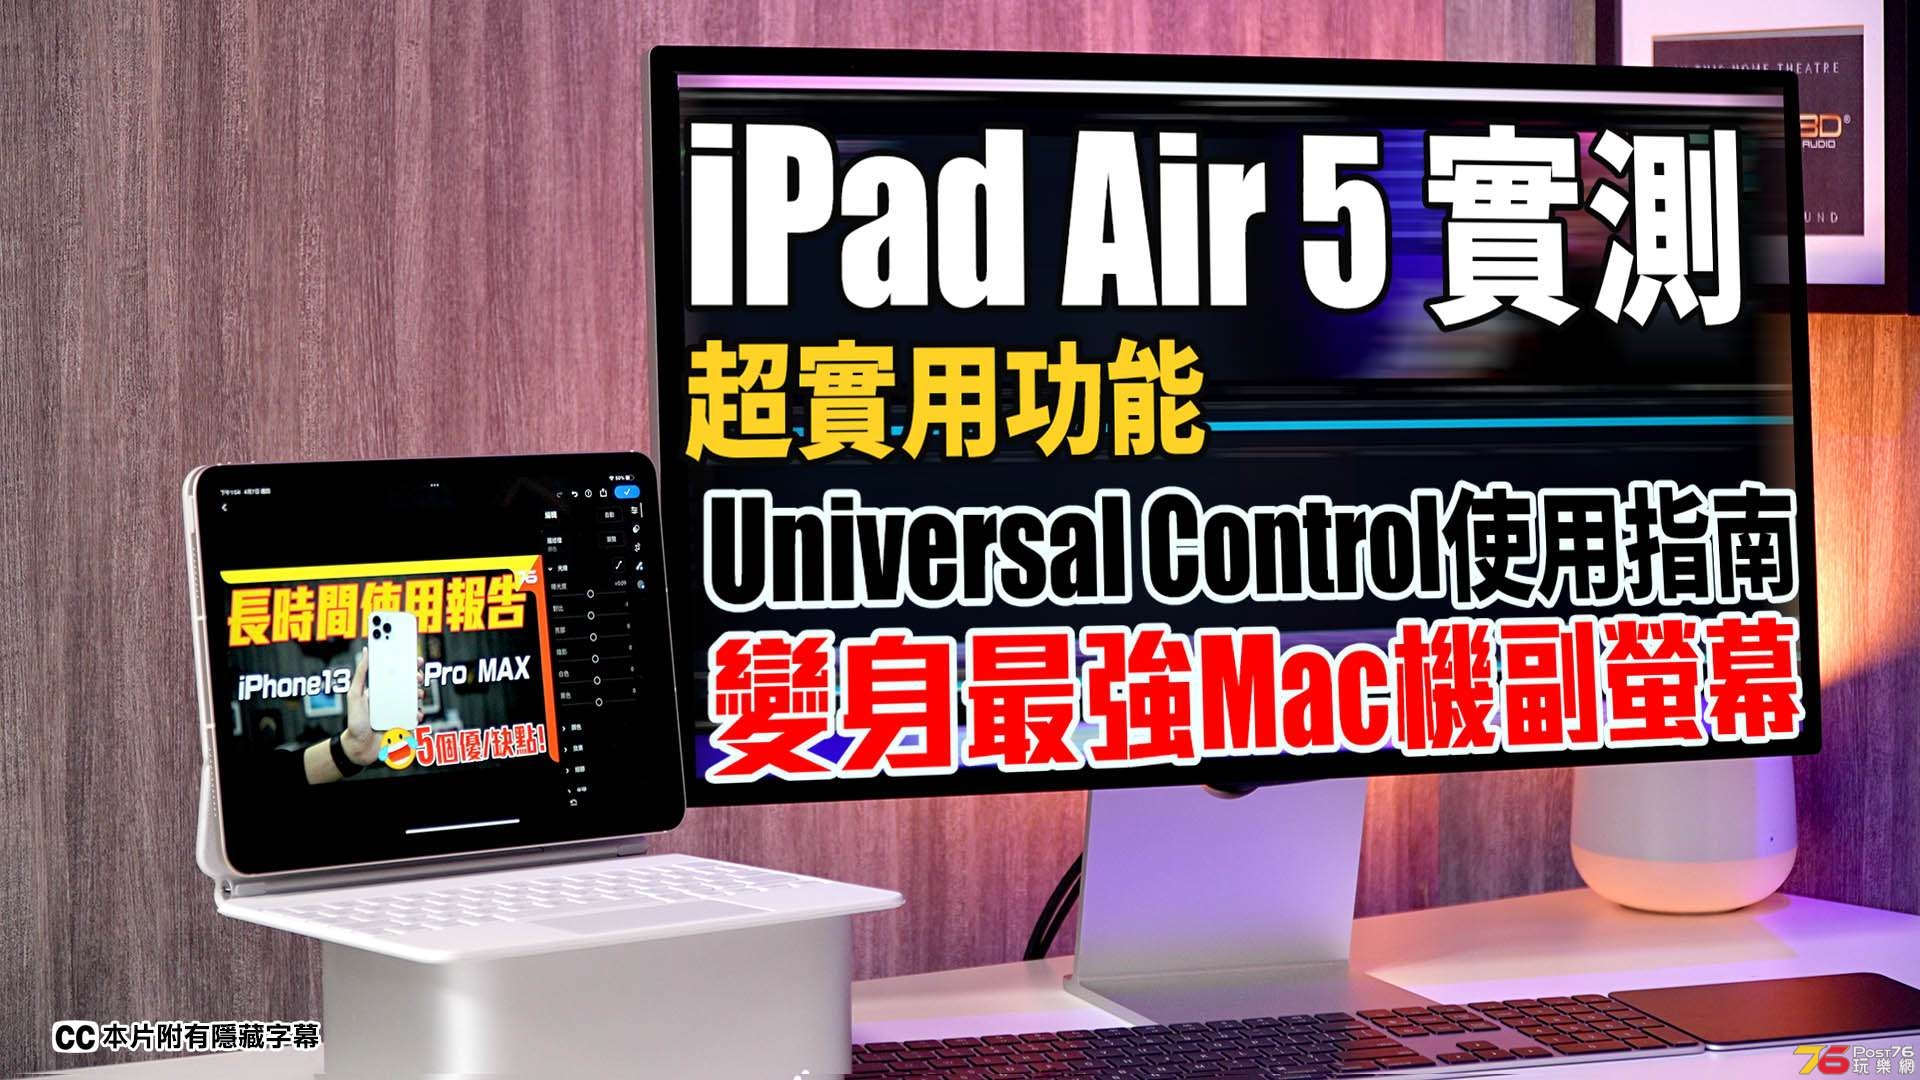 Apple iPad Air 5 review forum copy.jpg